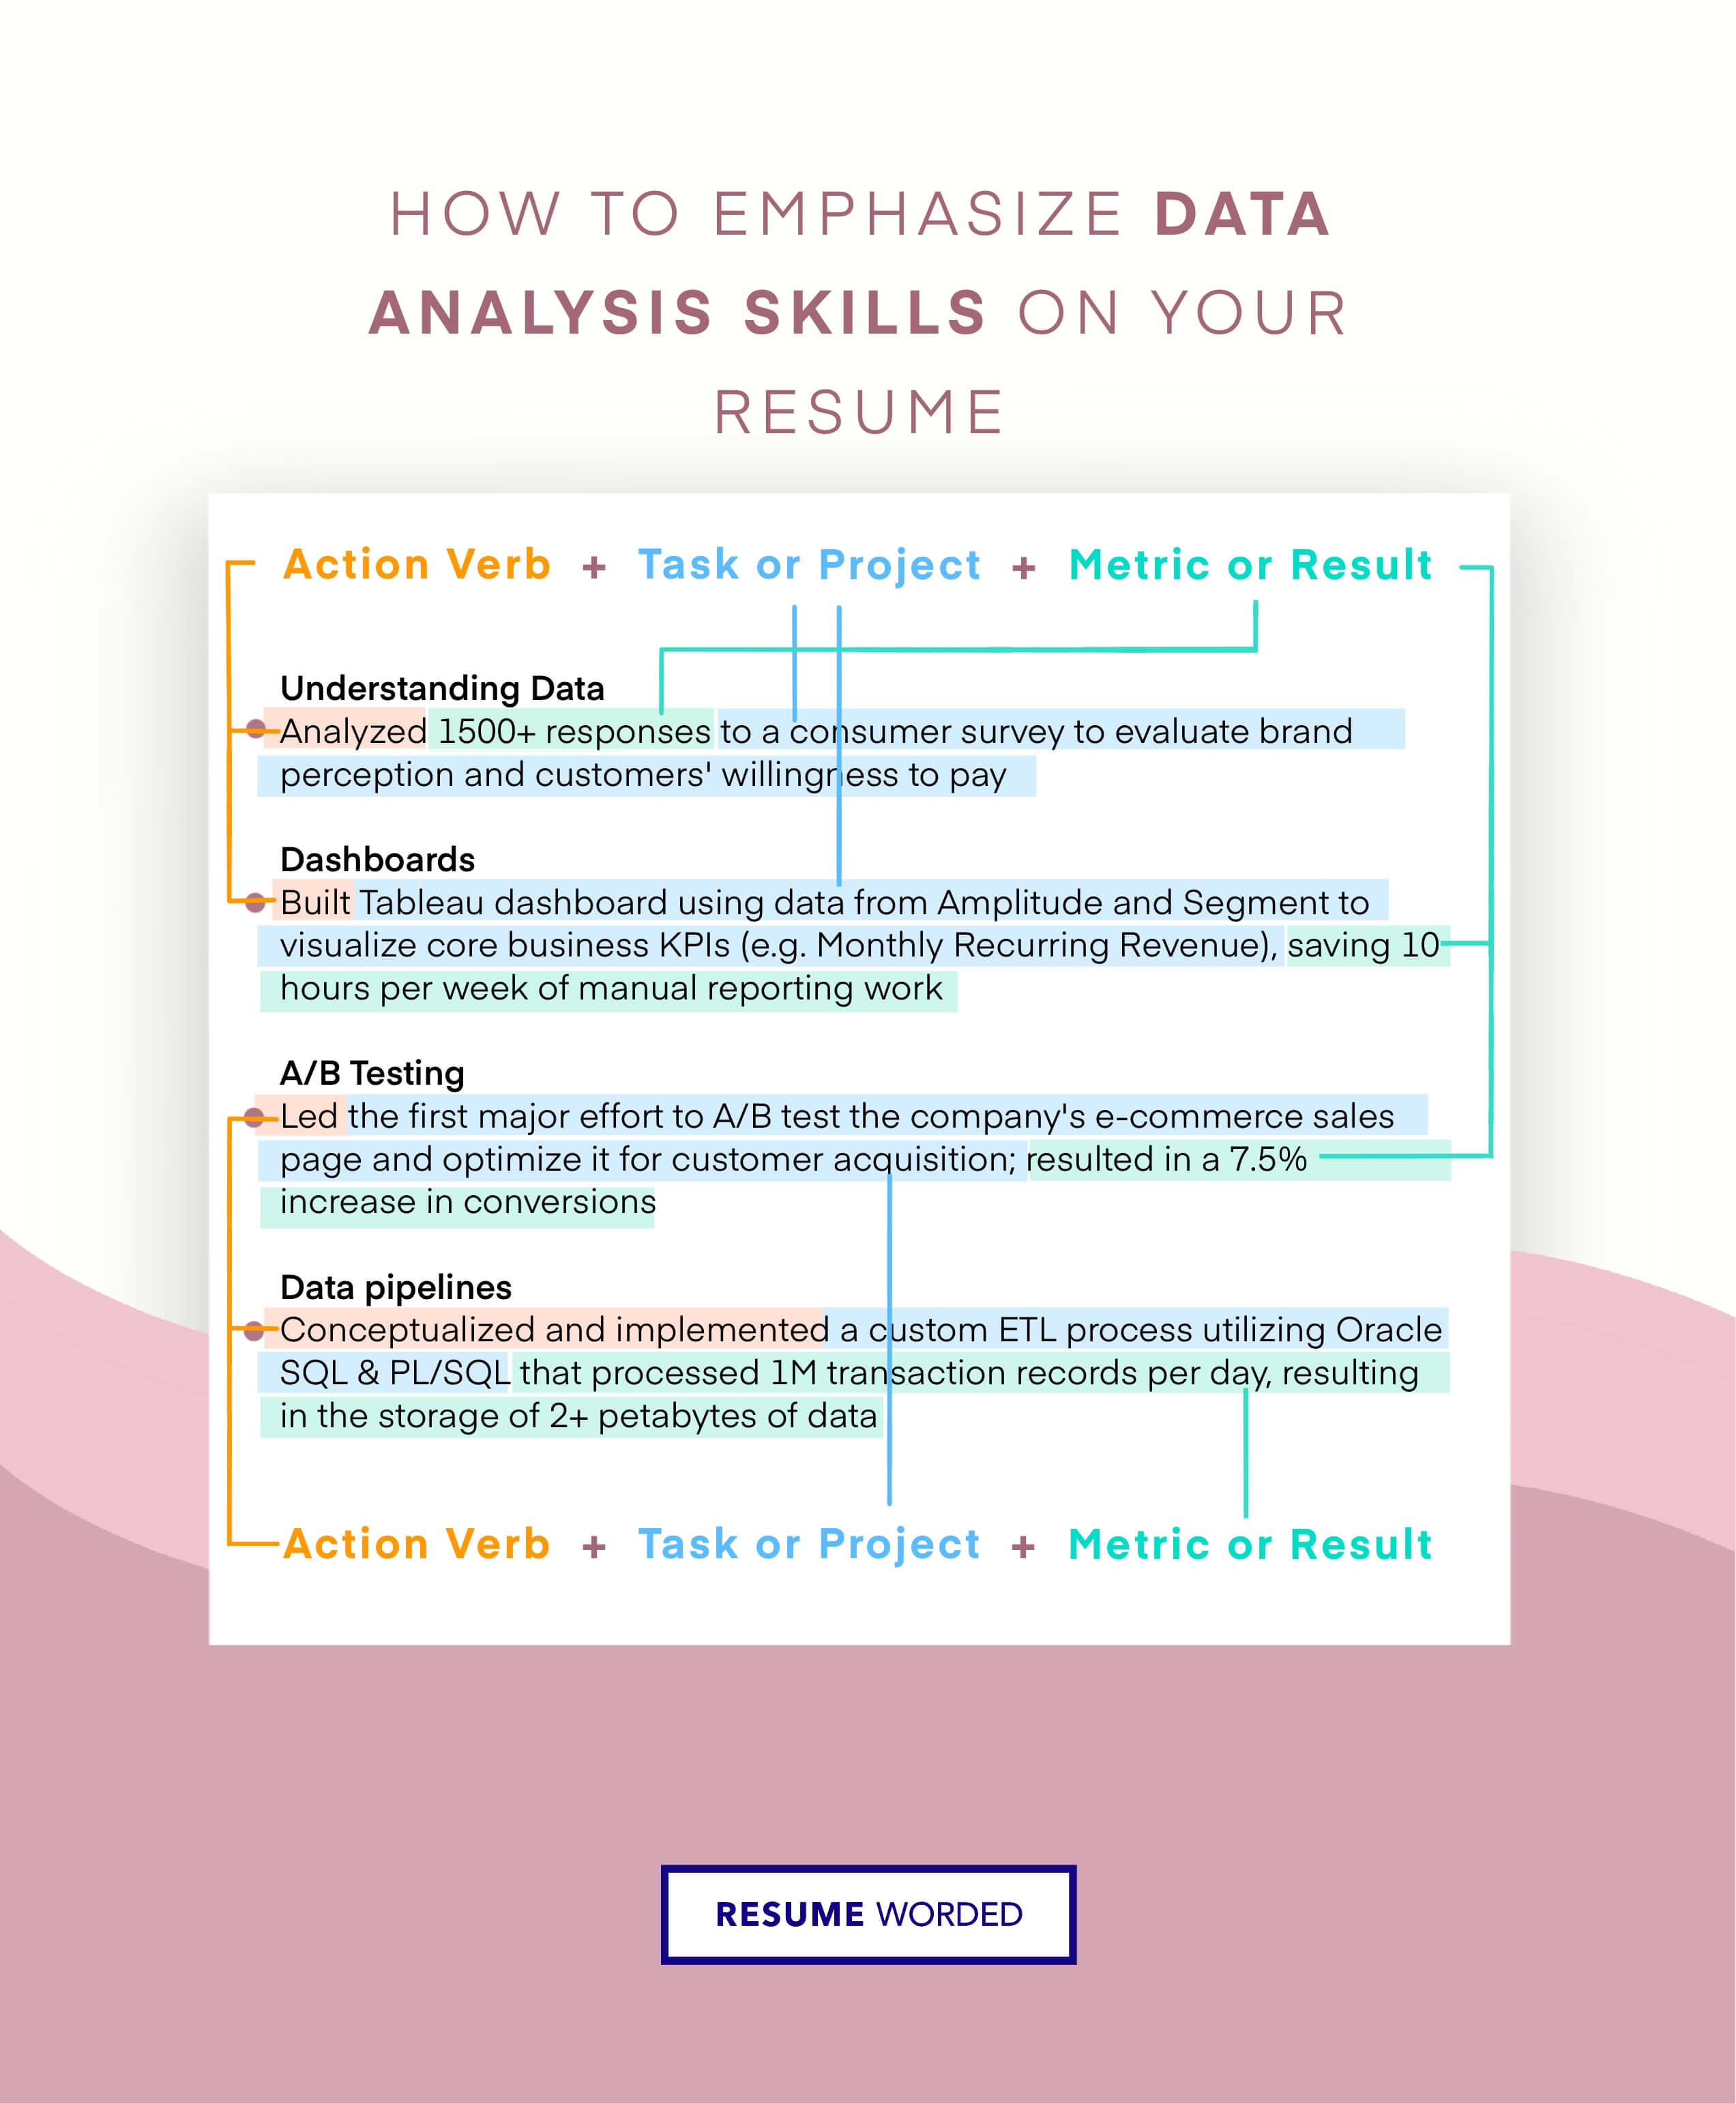 Demonstrate your data analysis skills - Sales Director Resume